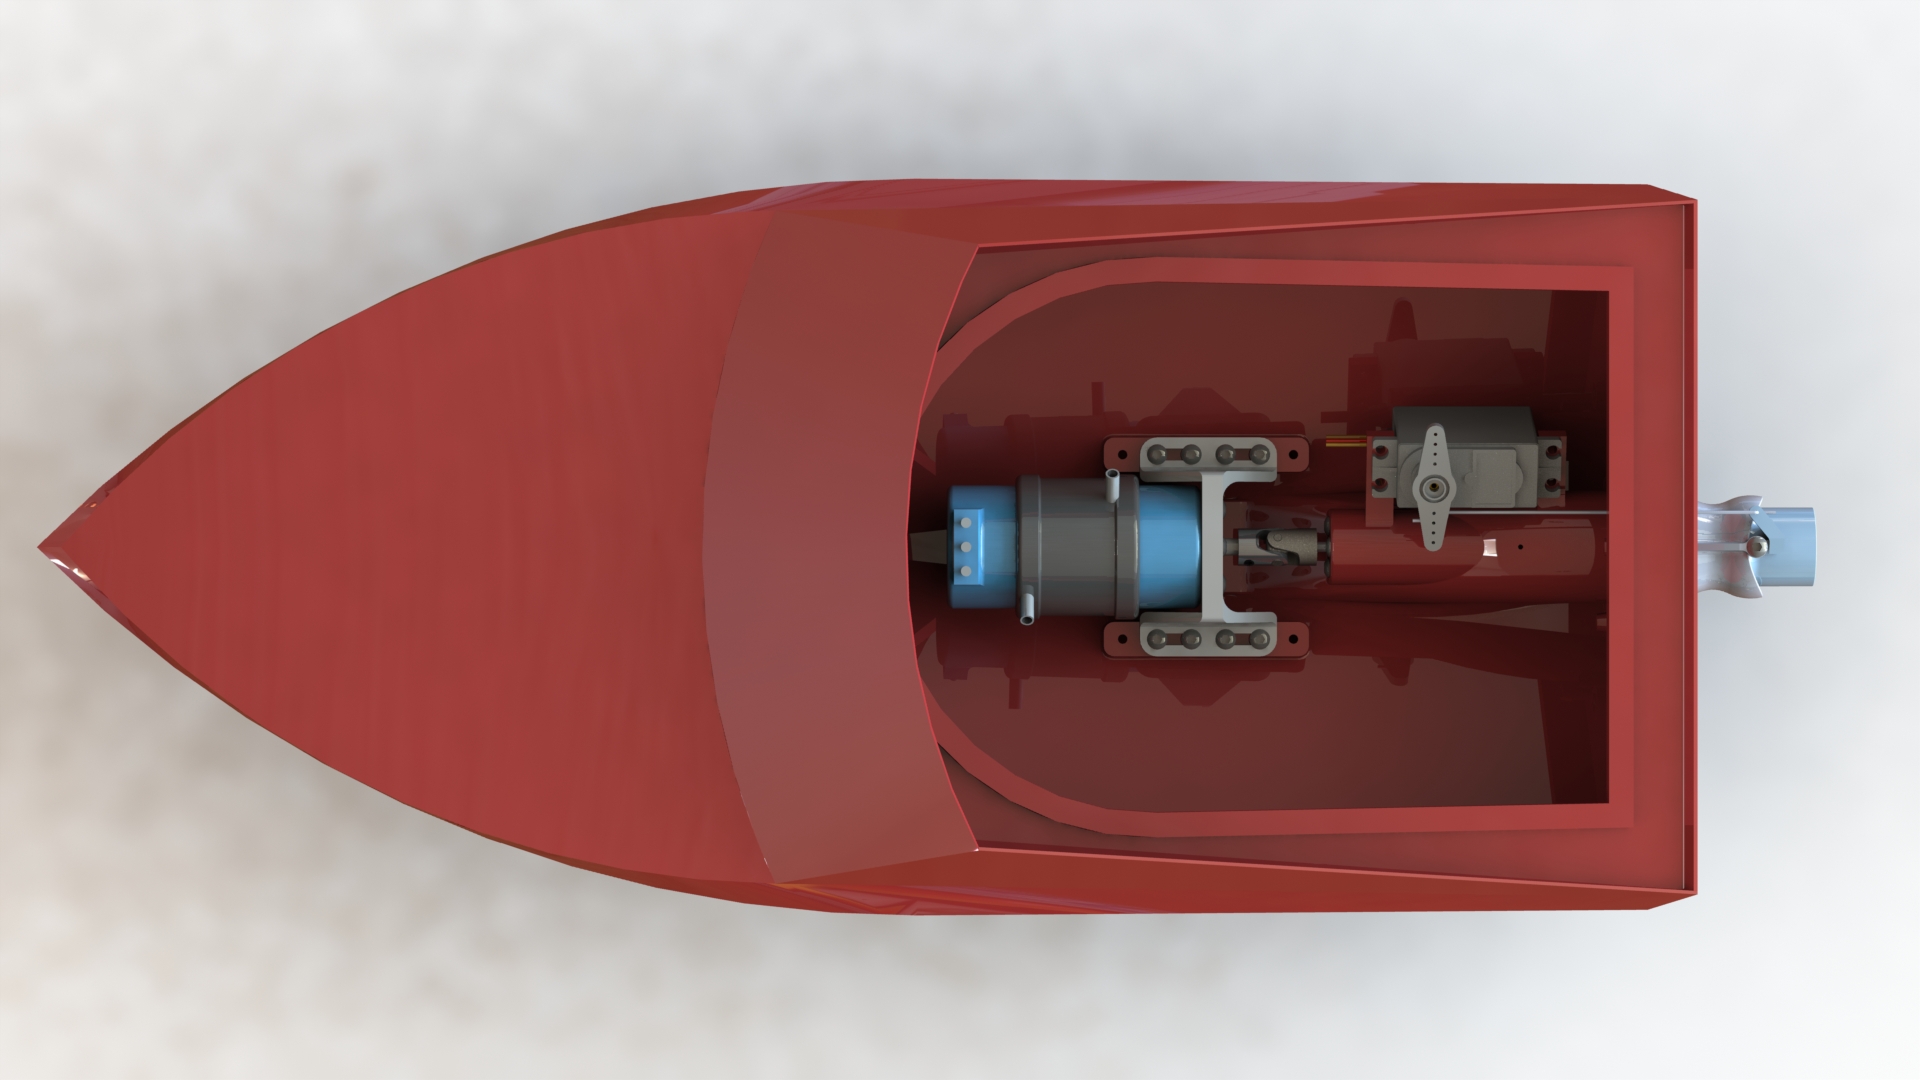 Version 3: 3D printed Jetsprint jet boat